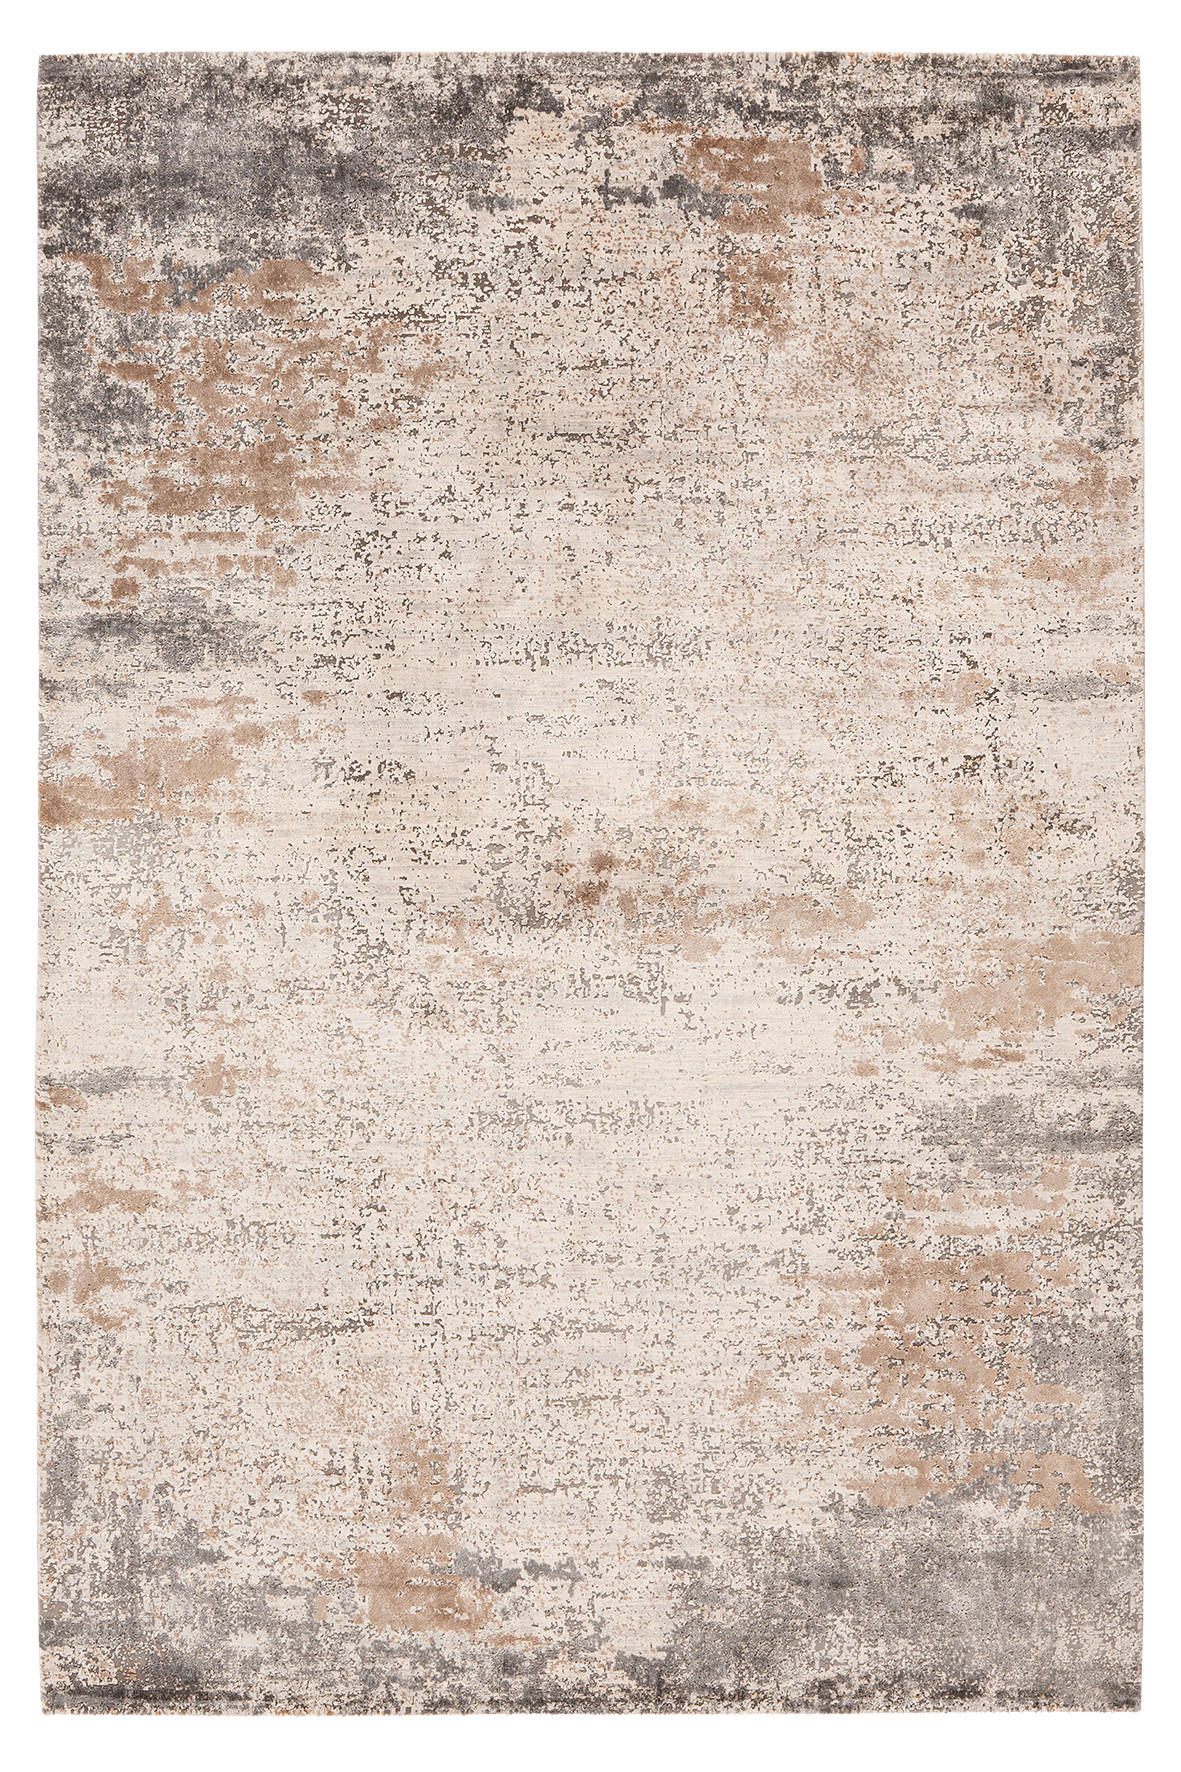 WEBTEPPICH  160/230 cm  Taupe   - Taupe, KONVENTIONELL, Textil (160/230cm) - Novel